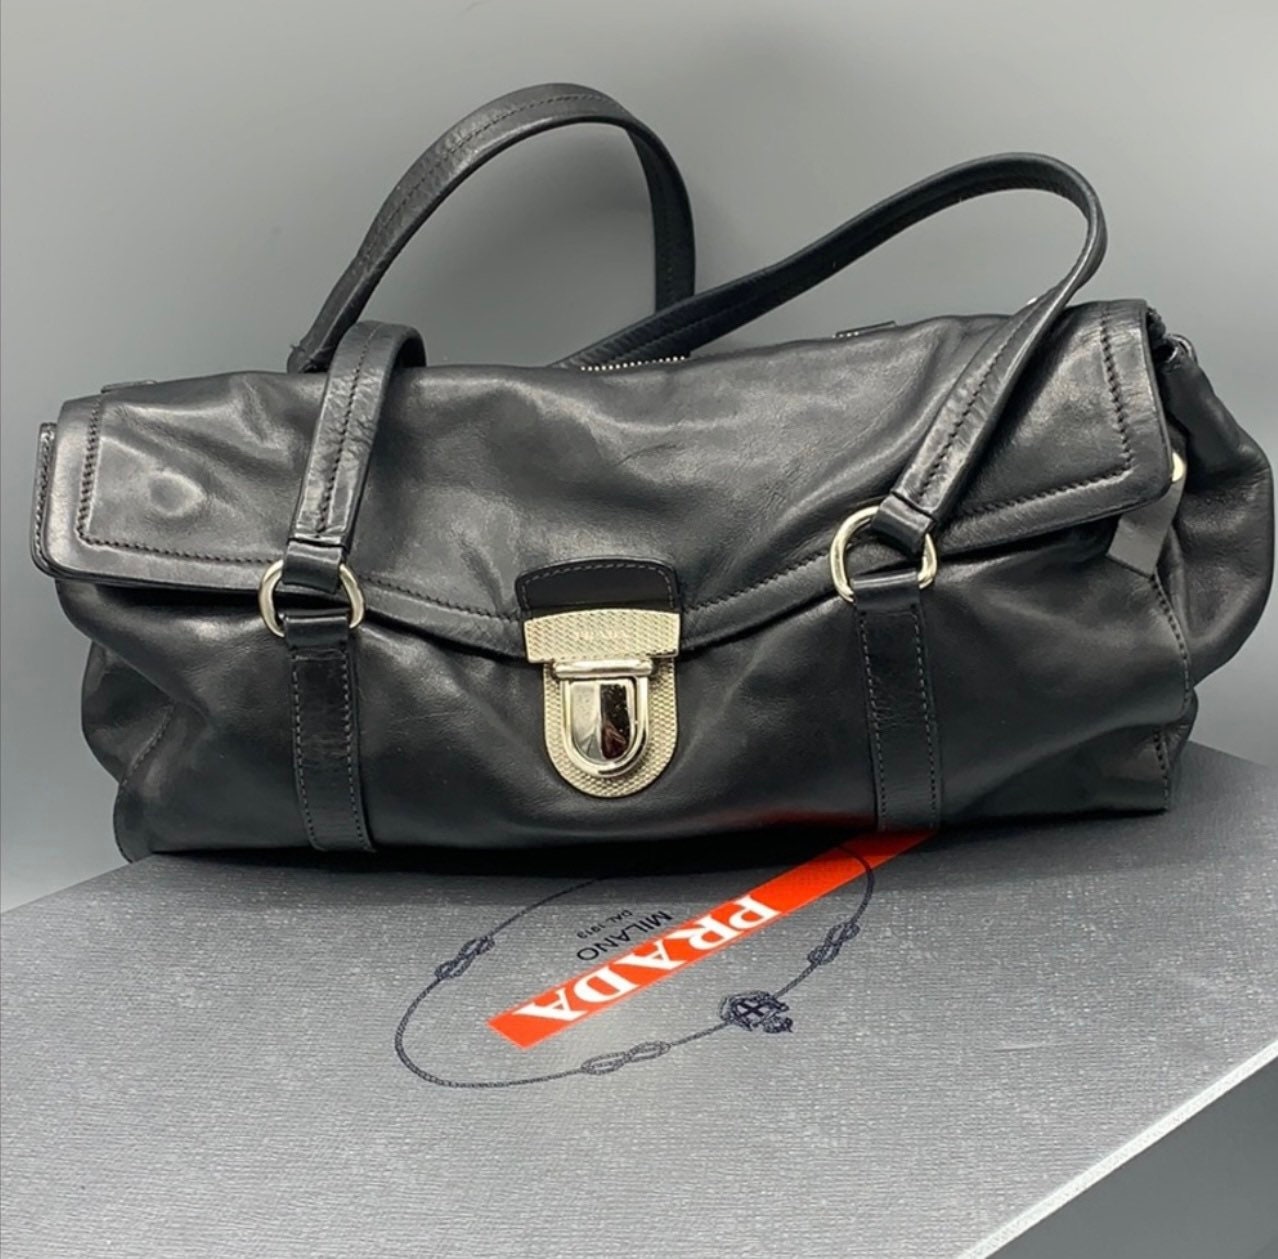 Prada Pattina Studded Trim Crossbody Handbag